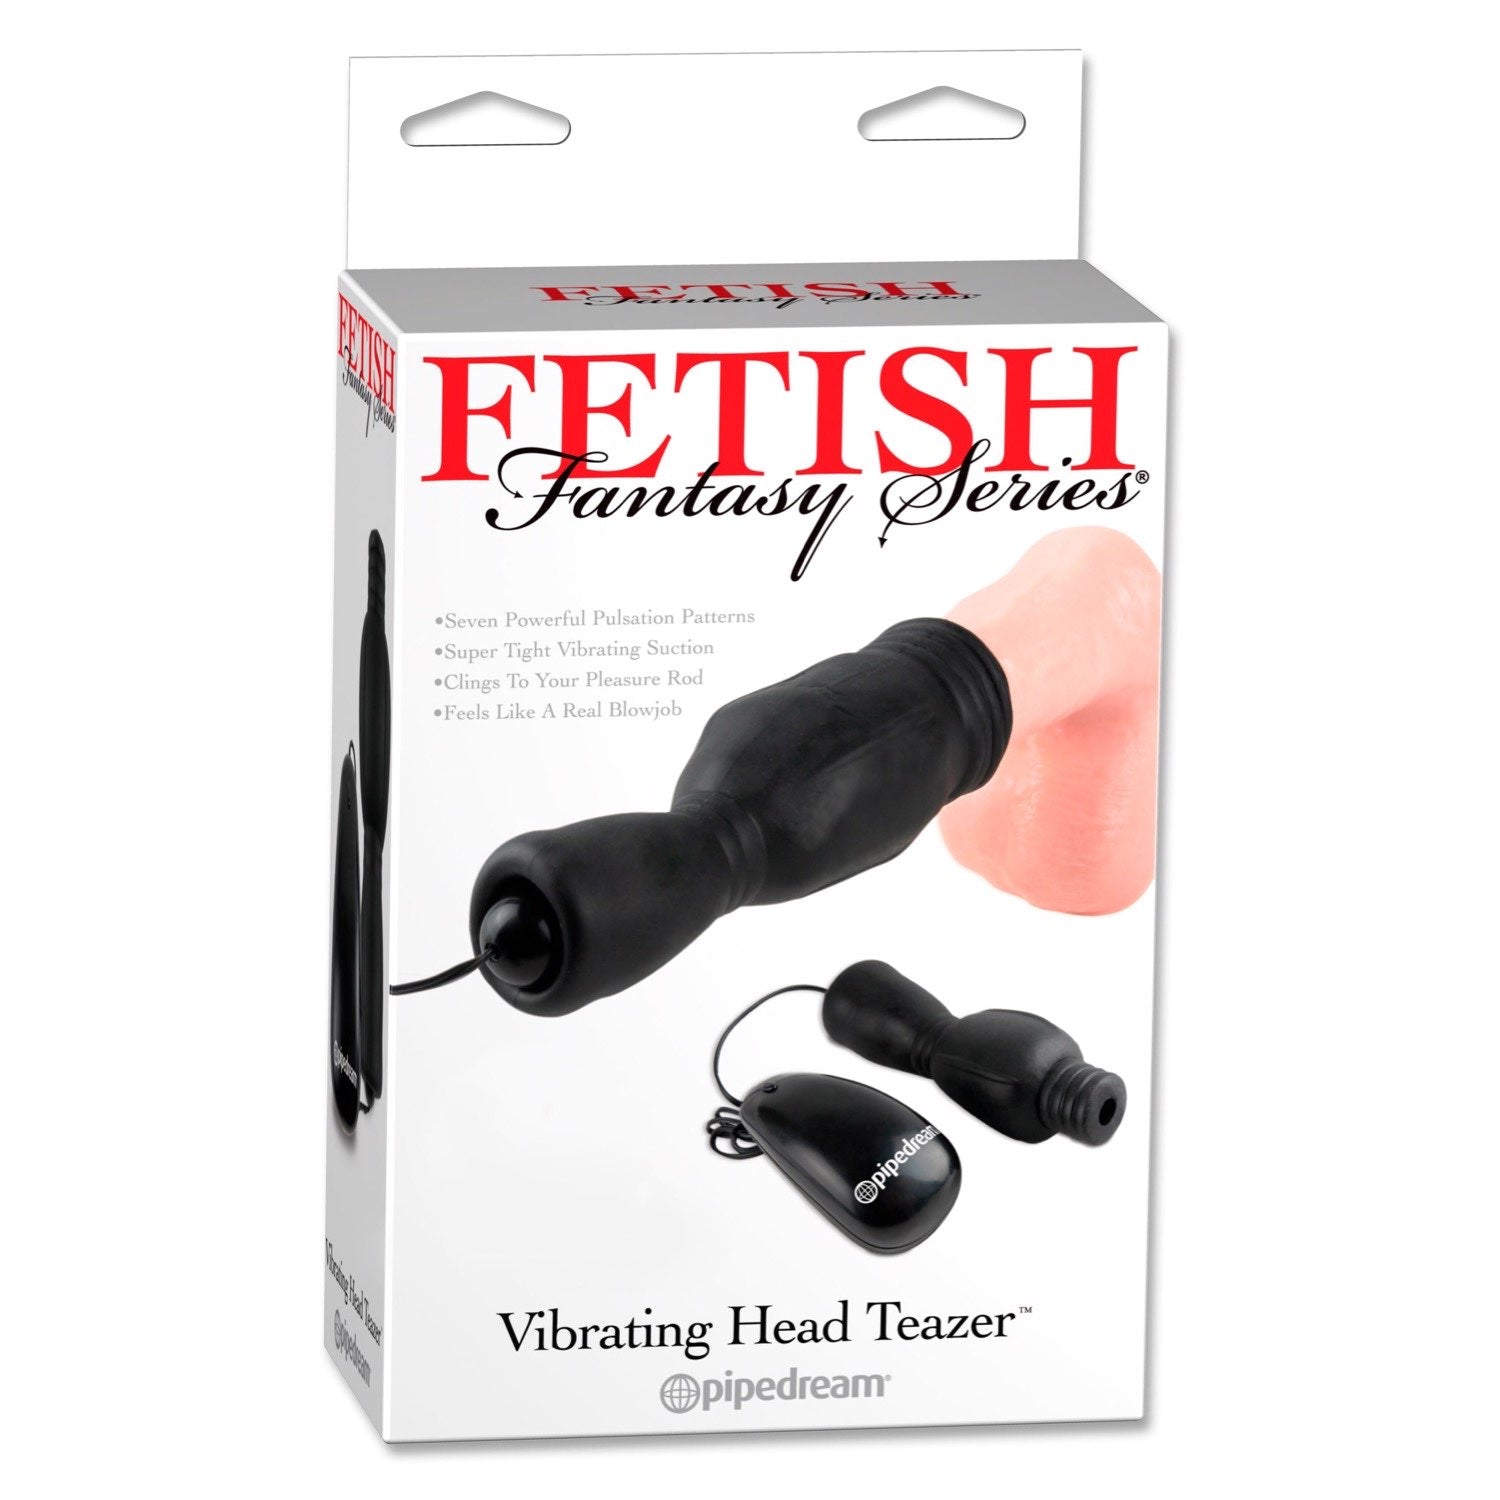 Fetish Fantasy Series Vibrating Head Teazer - Black Vibrating Masturbator by Pipedream